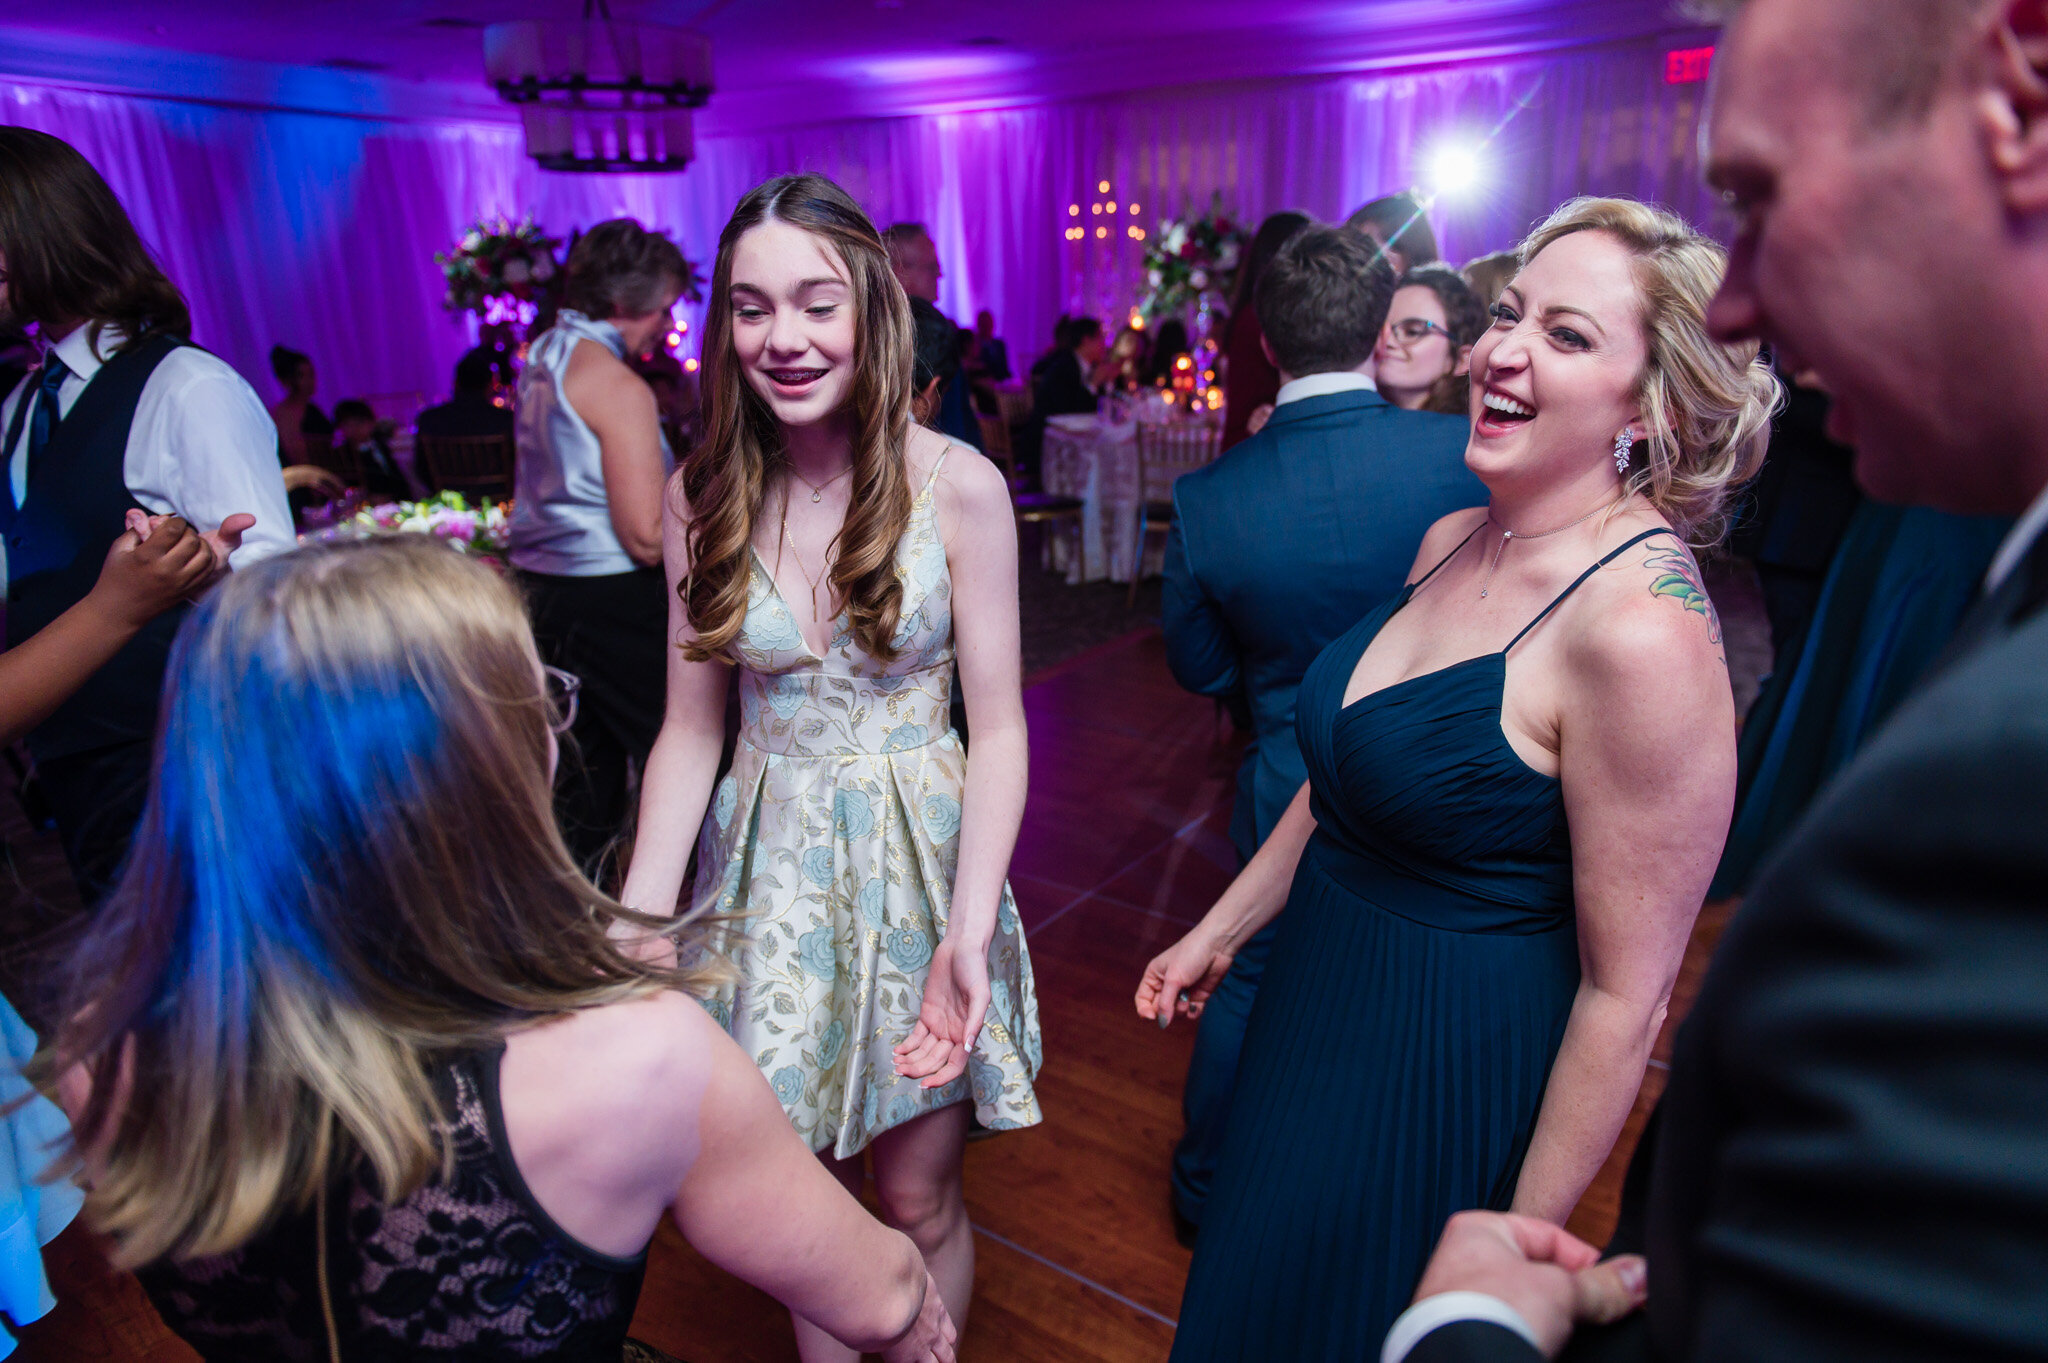 Dancing at a wedding reception in Ashburn Virginia